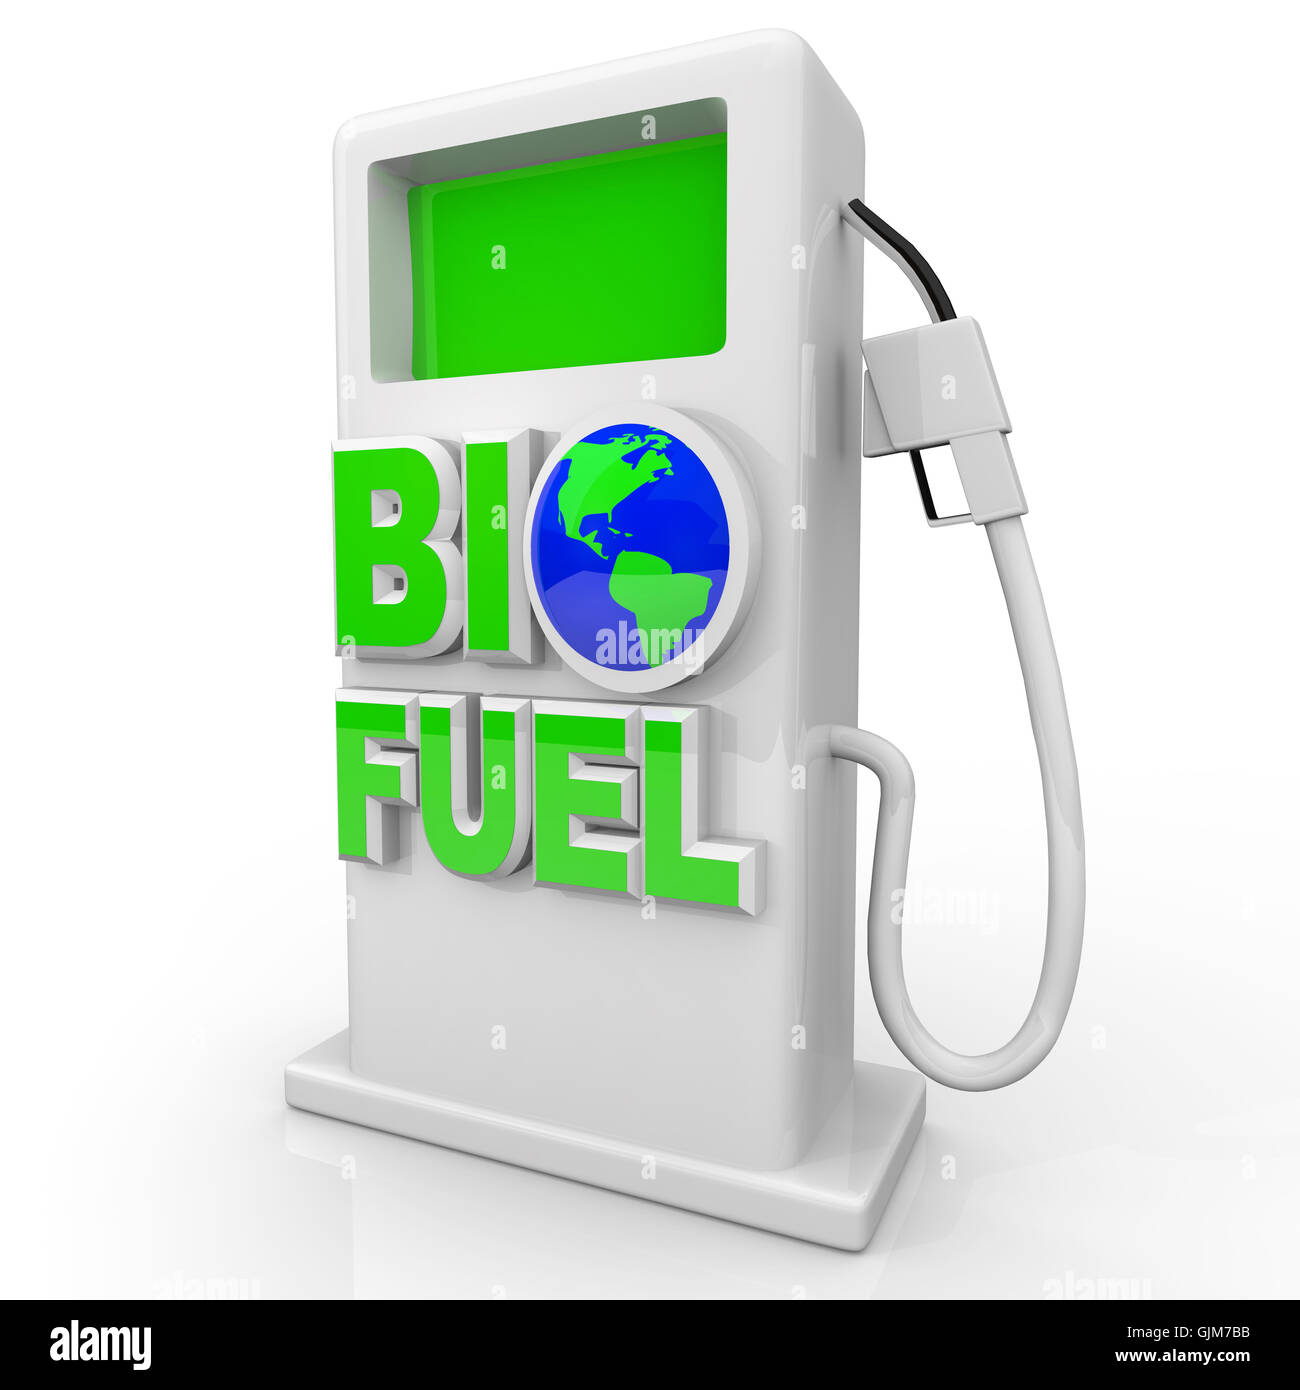 Biofuel - Green Gas Pump Station Stock Photo